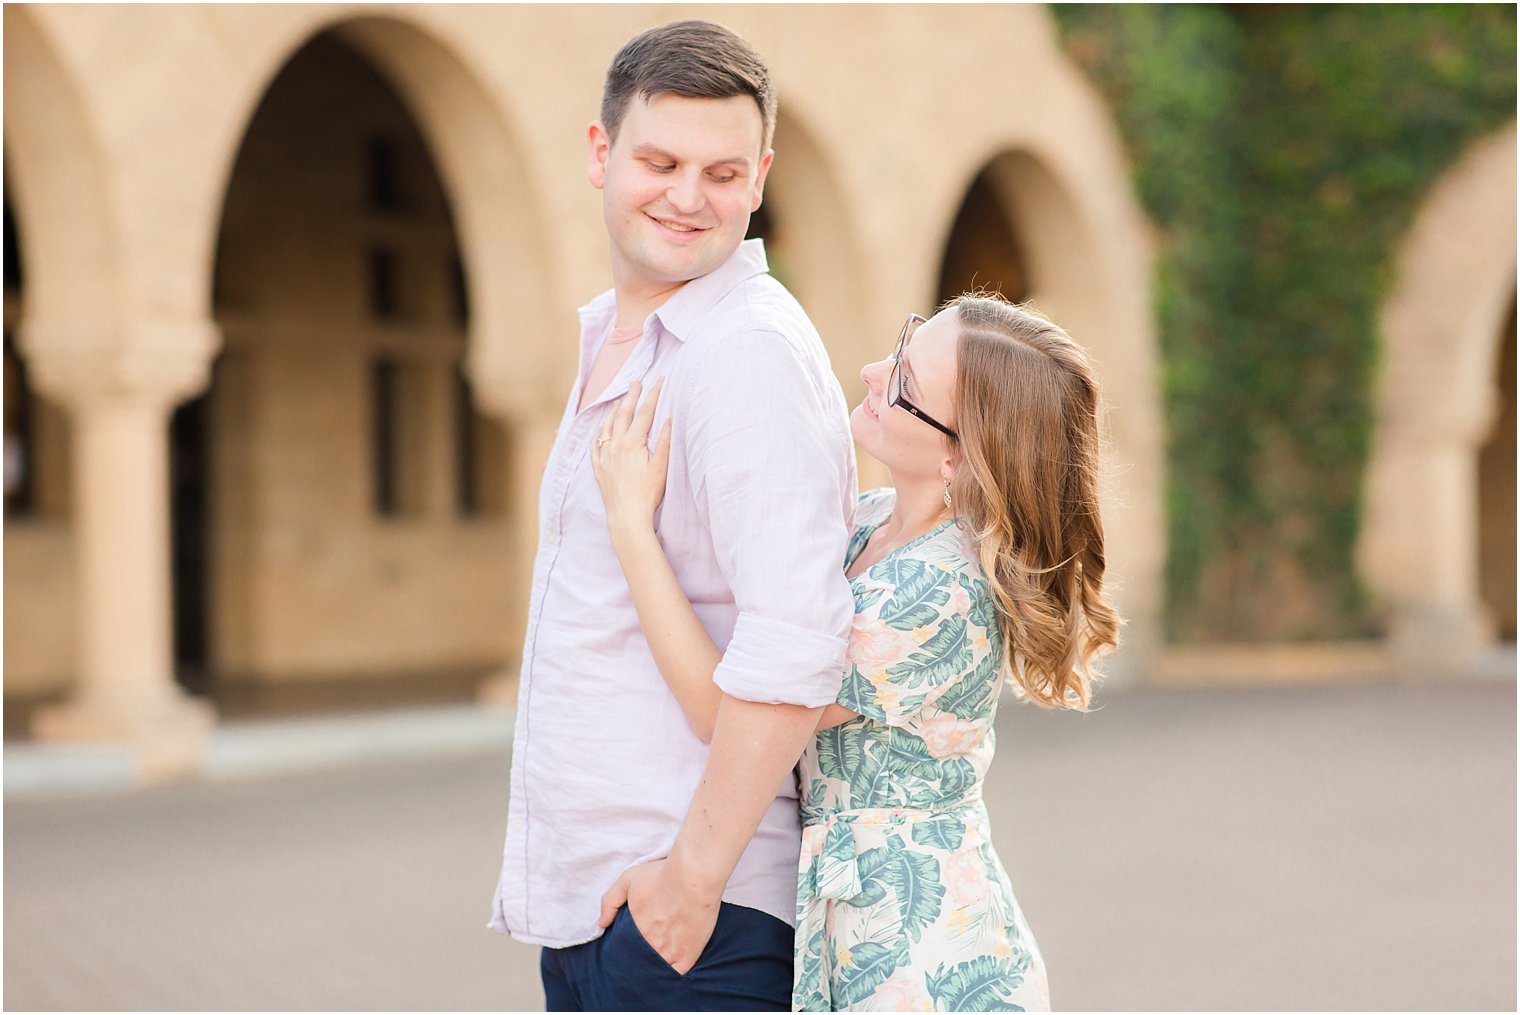 Engagement photos at Stanford University